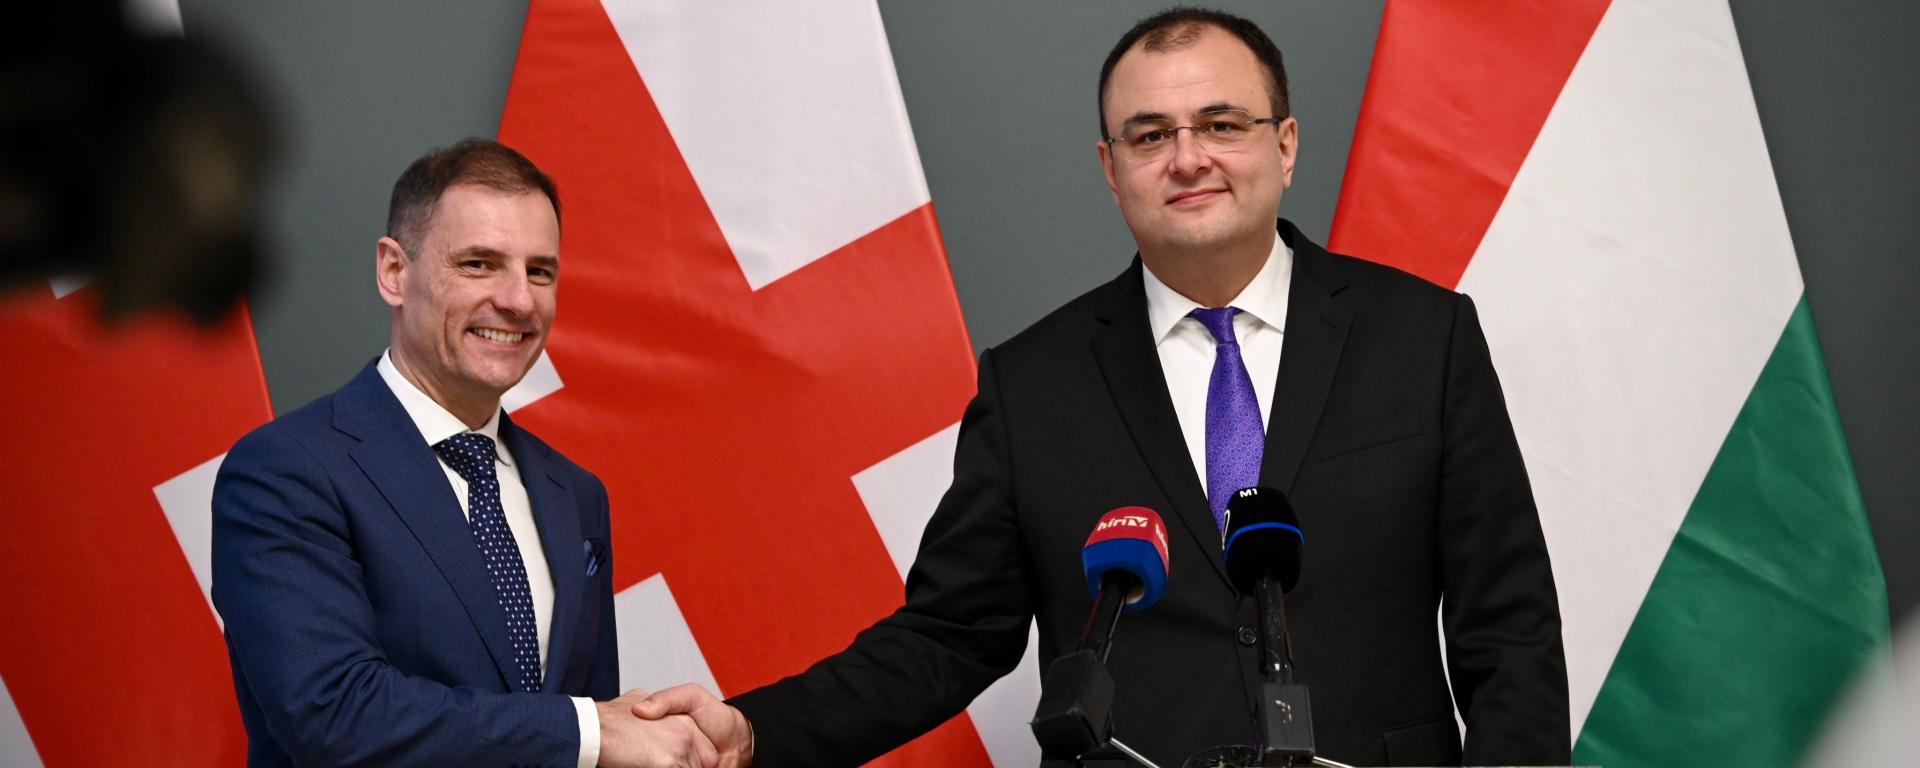 Hungary supports Georgia’s accession to the European Union